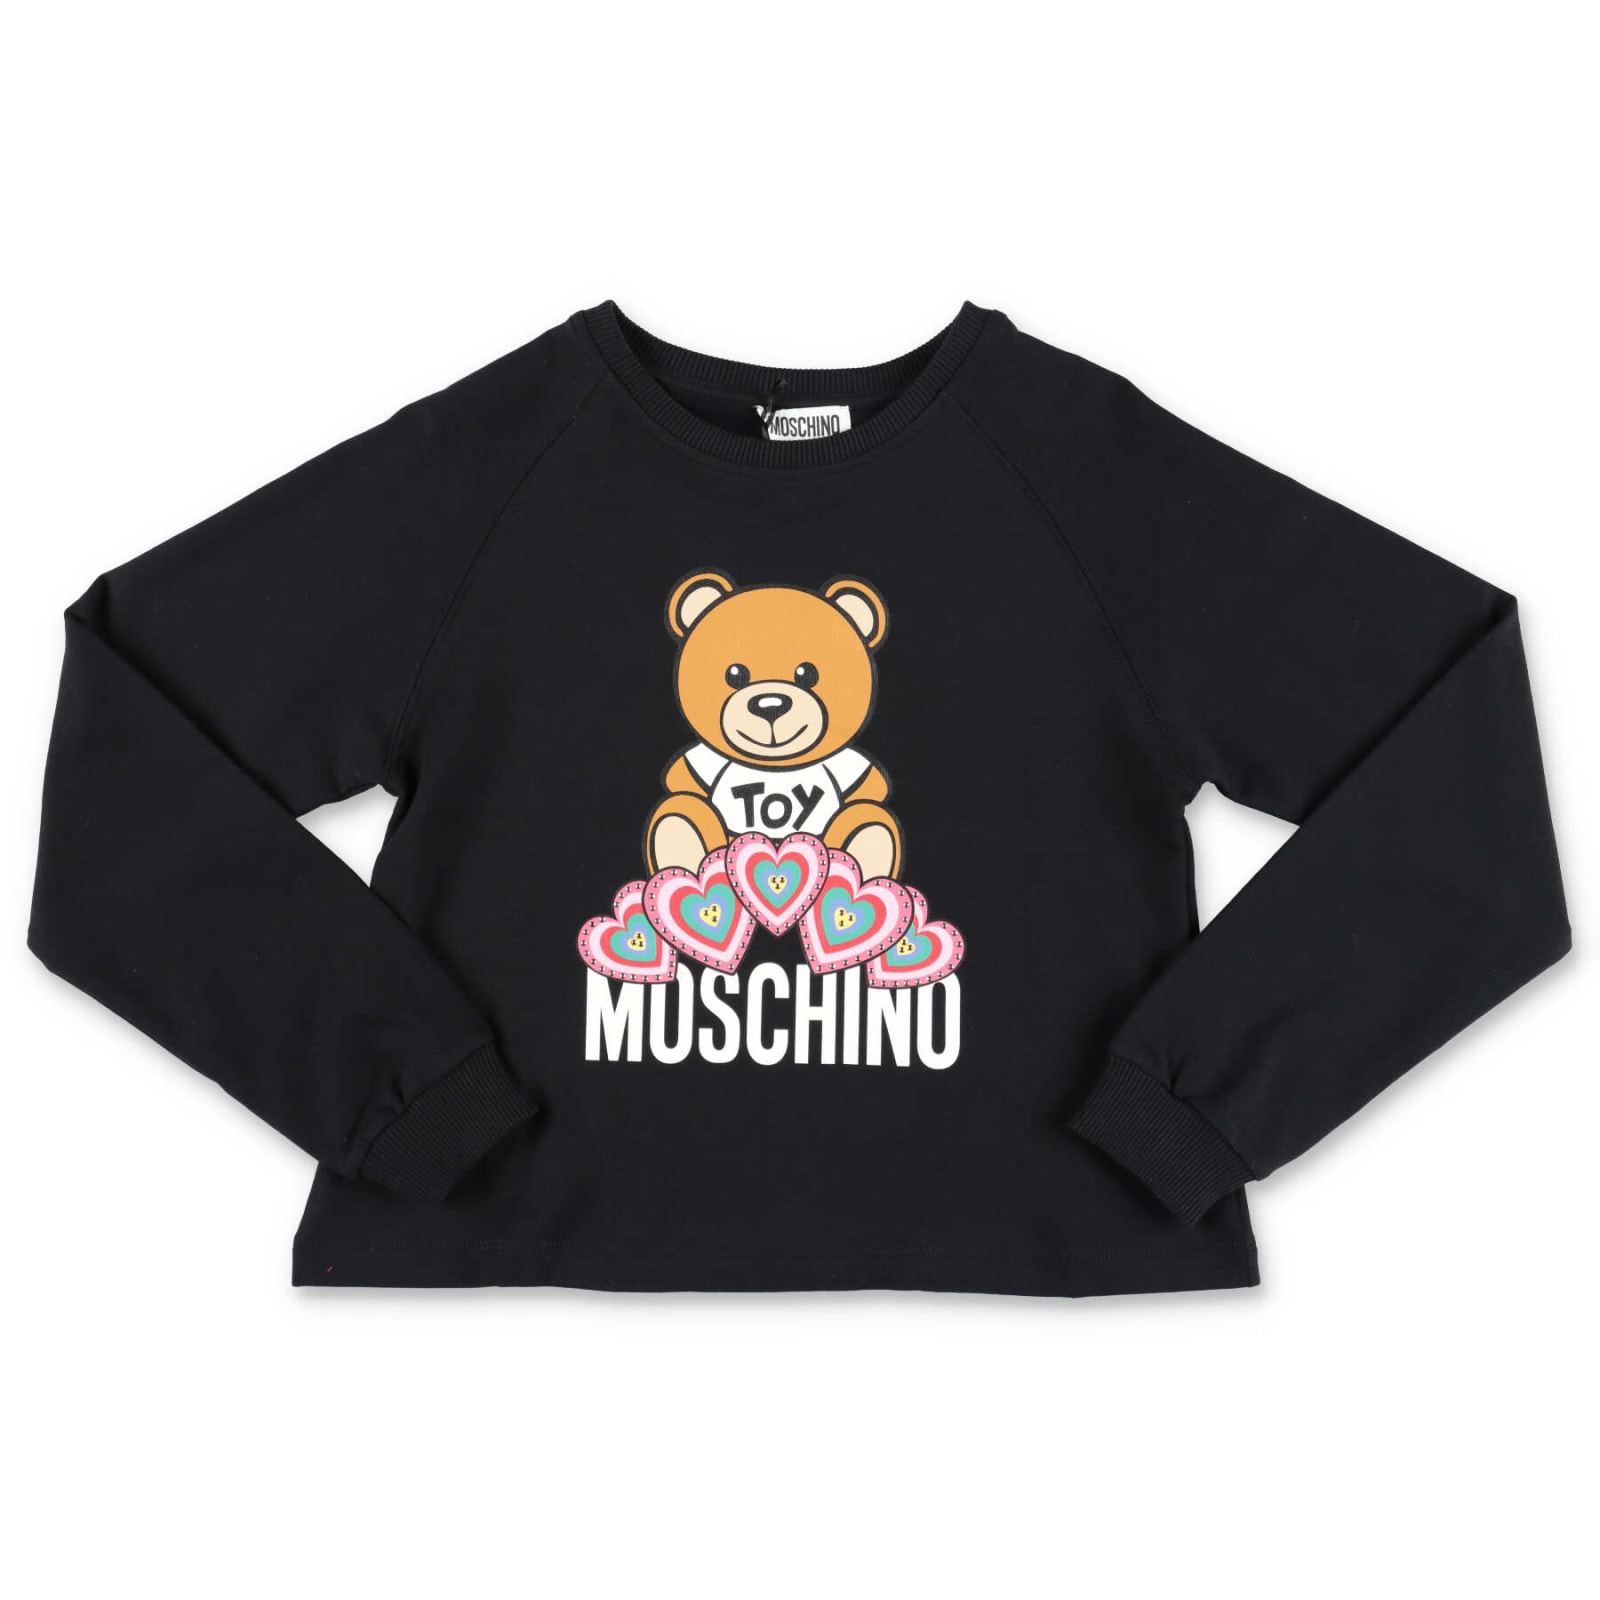 Moschino T-shirt Cropped Nera In Jersey Di Cotone